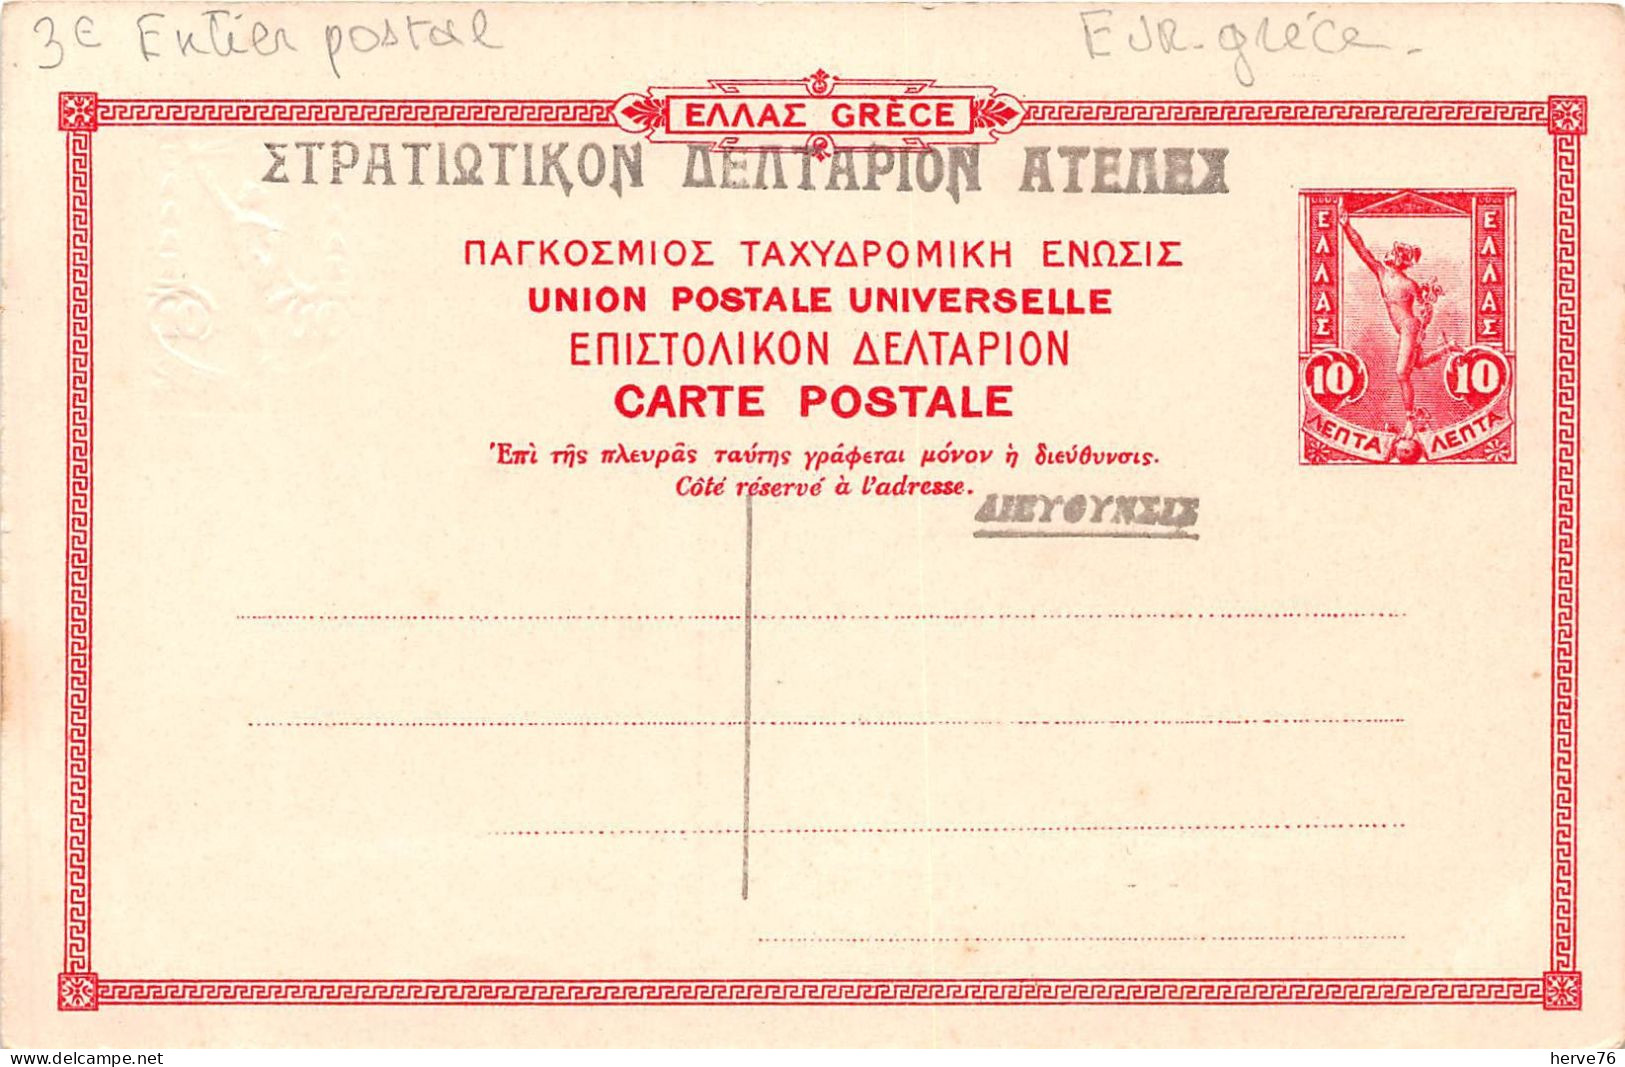 GRECE - CORFOU - Paysage De Paléocastritza - Entier Postal - Grecia